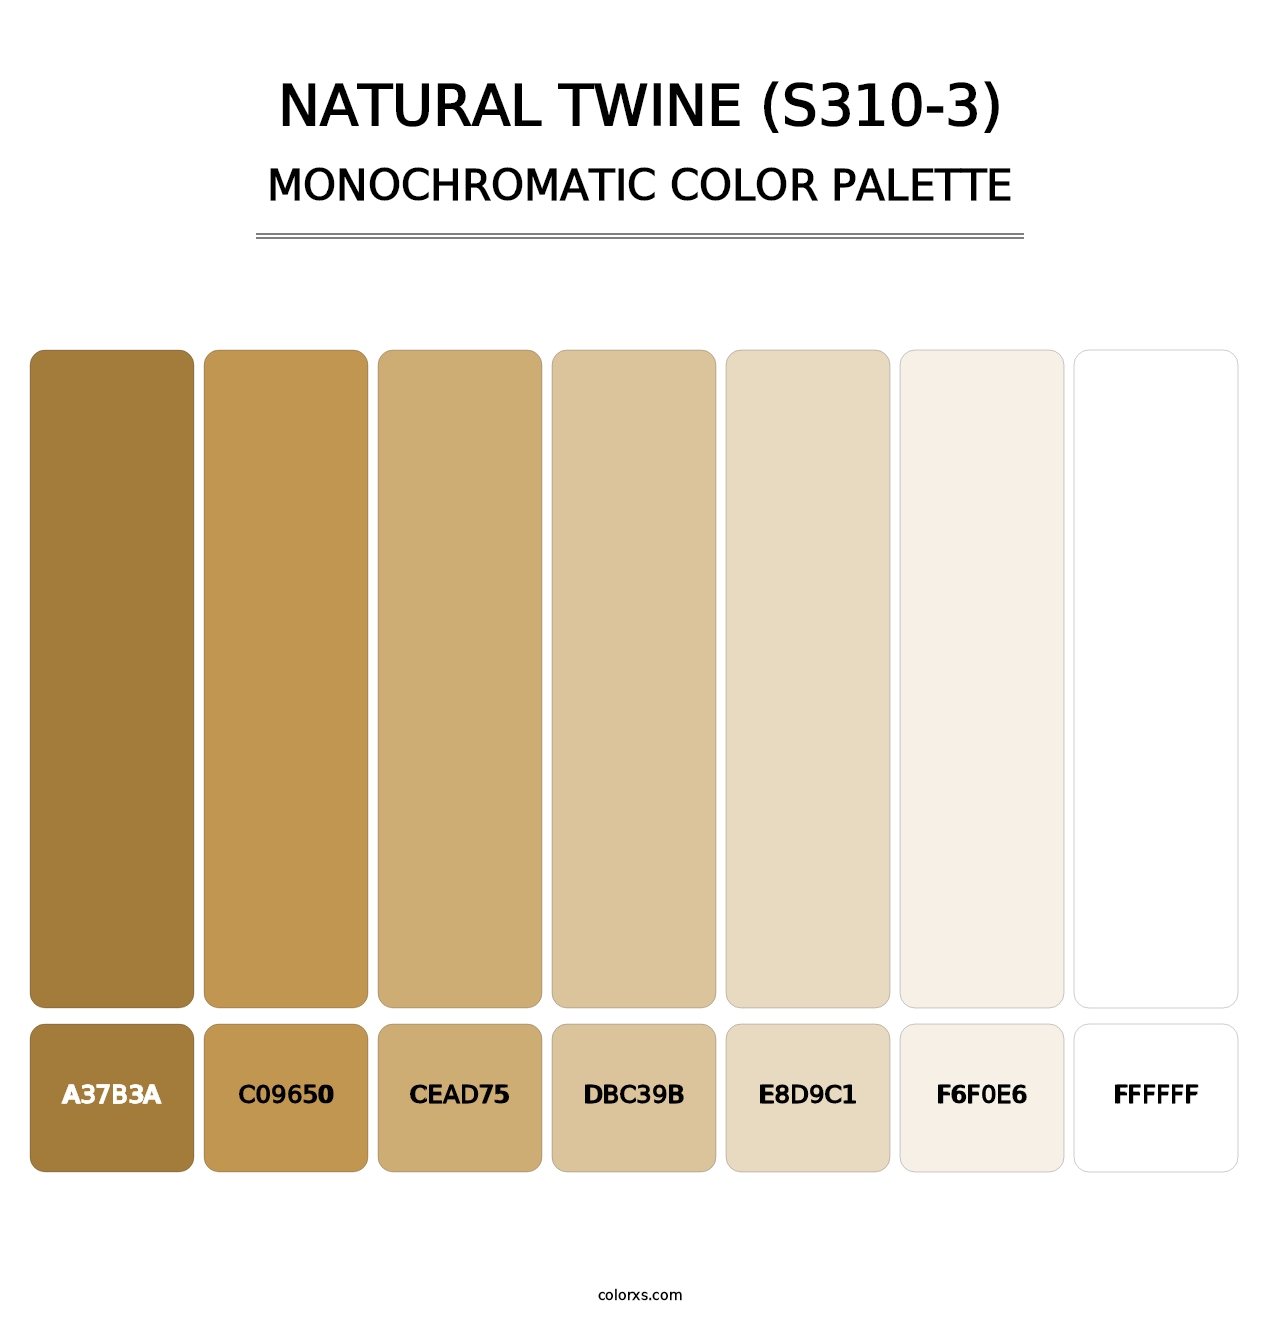 Natural Twine (S310-3) - Monochromatic Color Palette